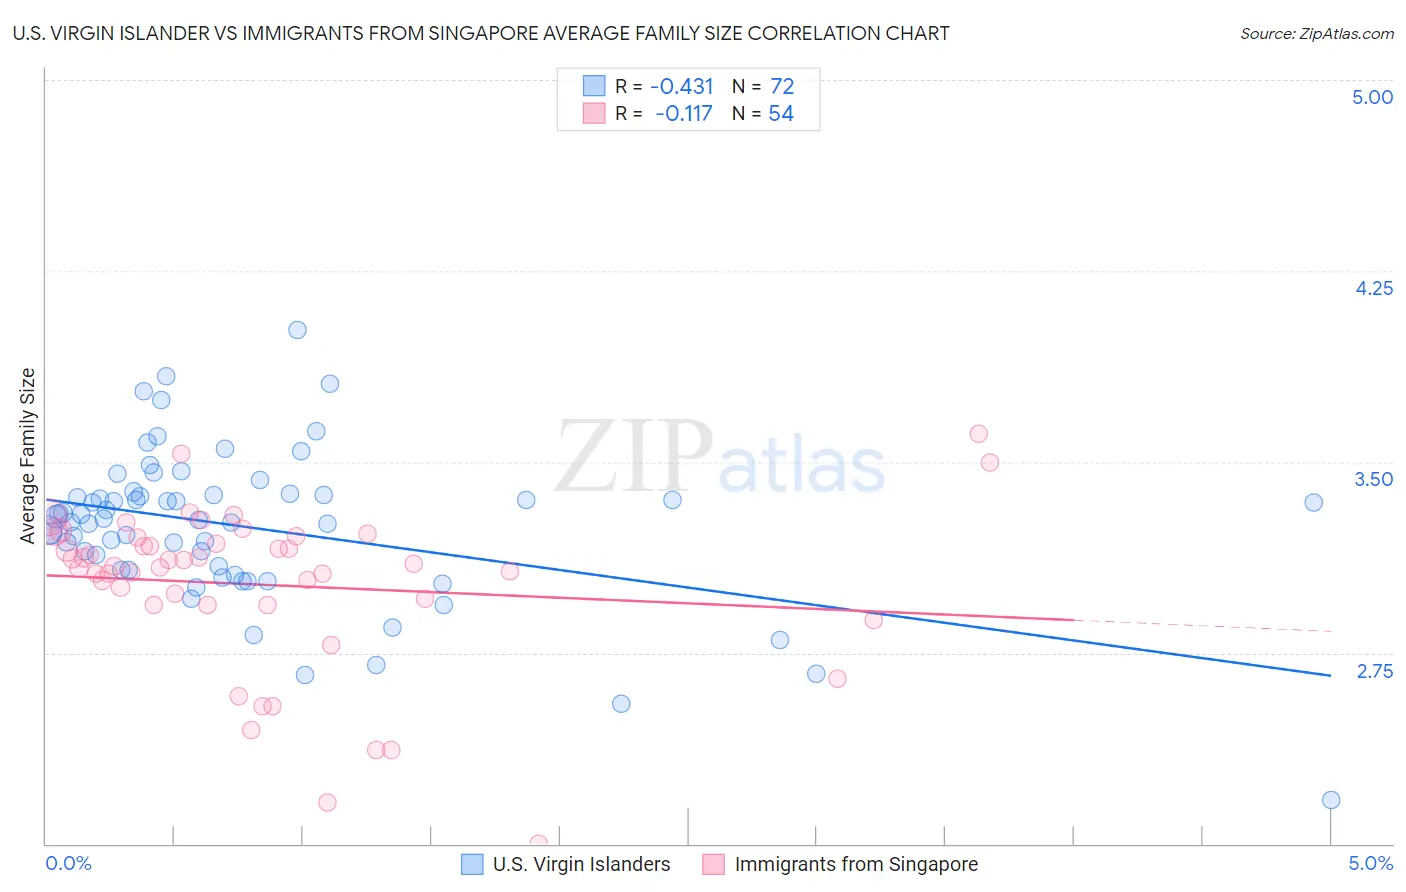 U.S. Virgin Islander vs Immigrants from Singapore Average Family Size